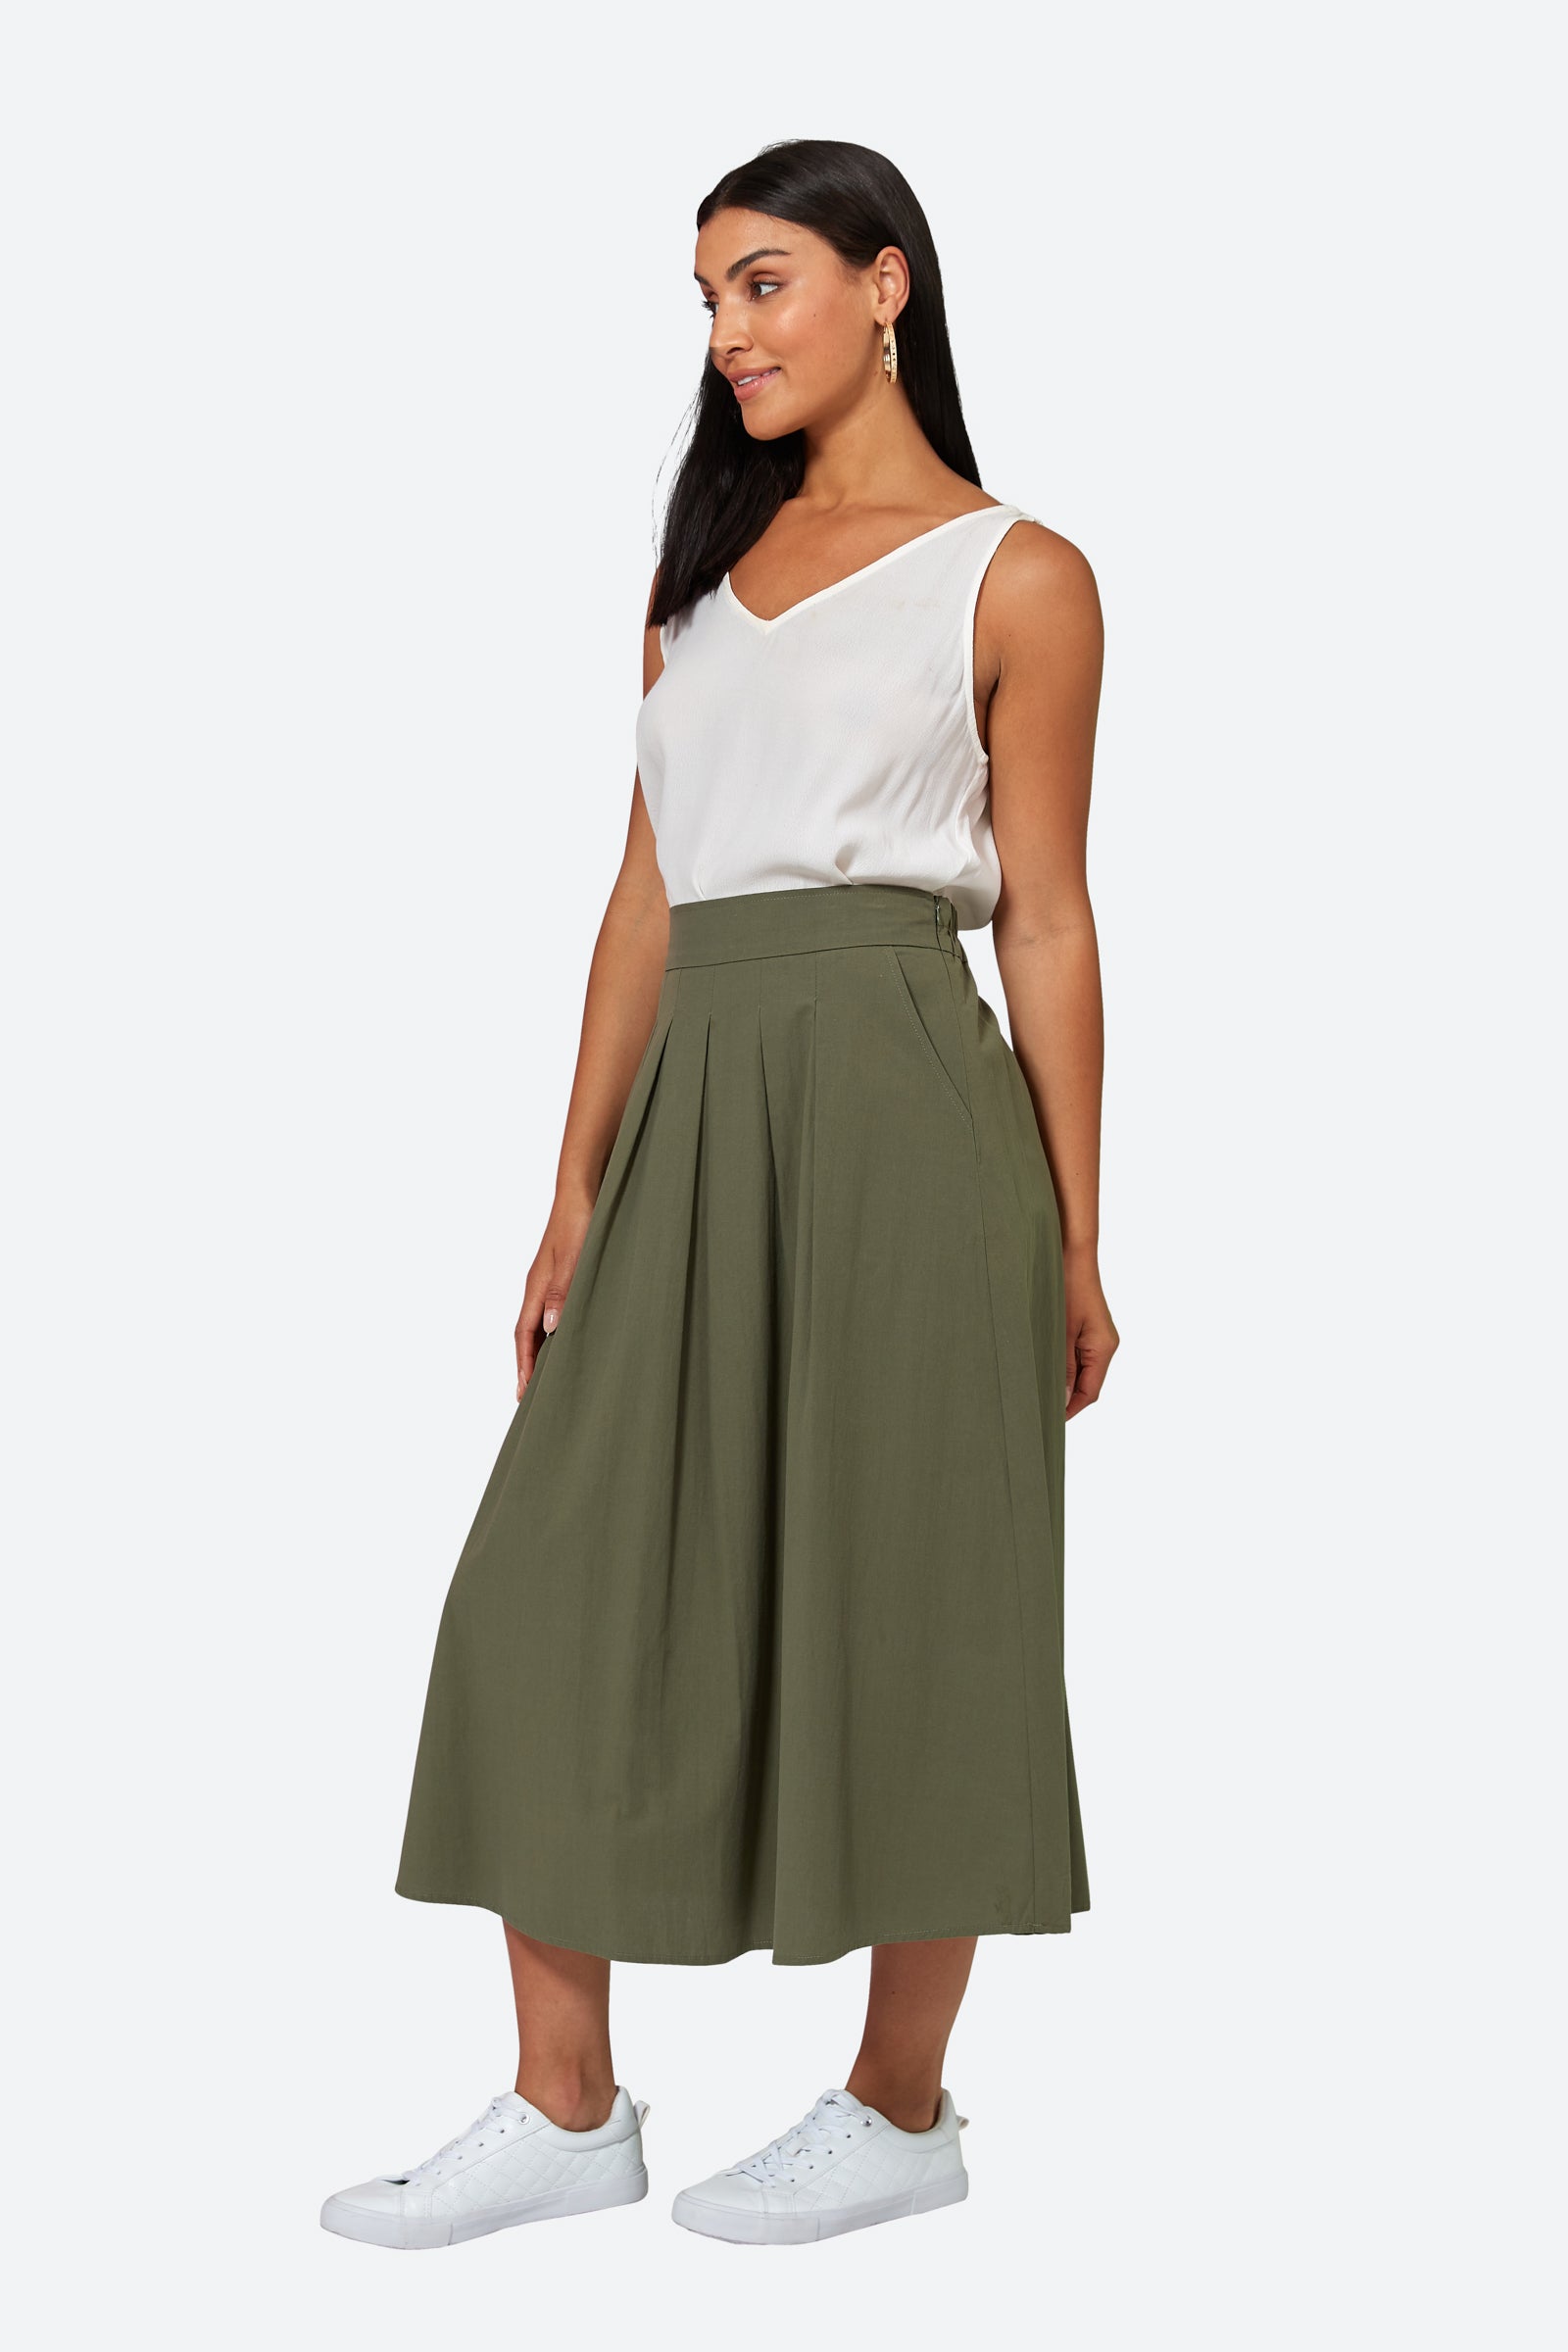 Studio Pleat Skirt - Khaki - eb&ive Clothing - Skirt Maxi